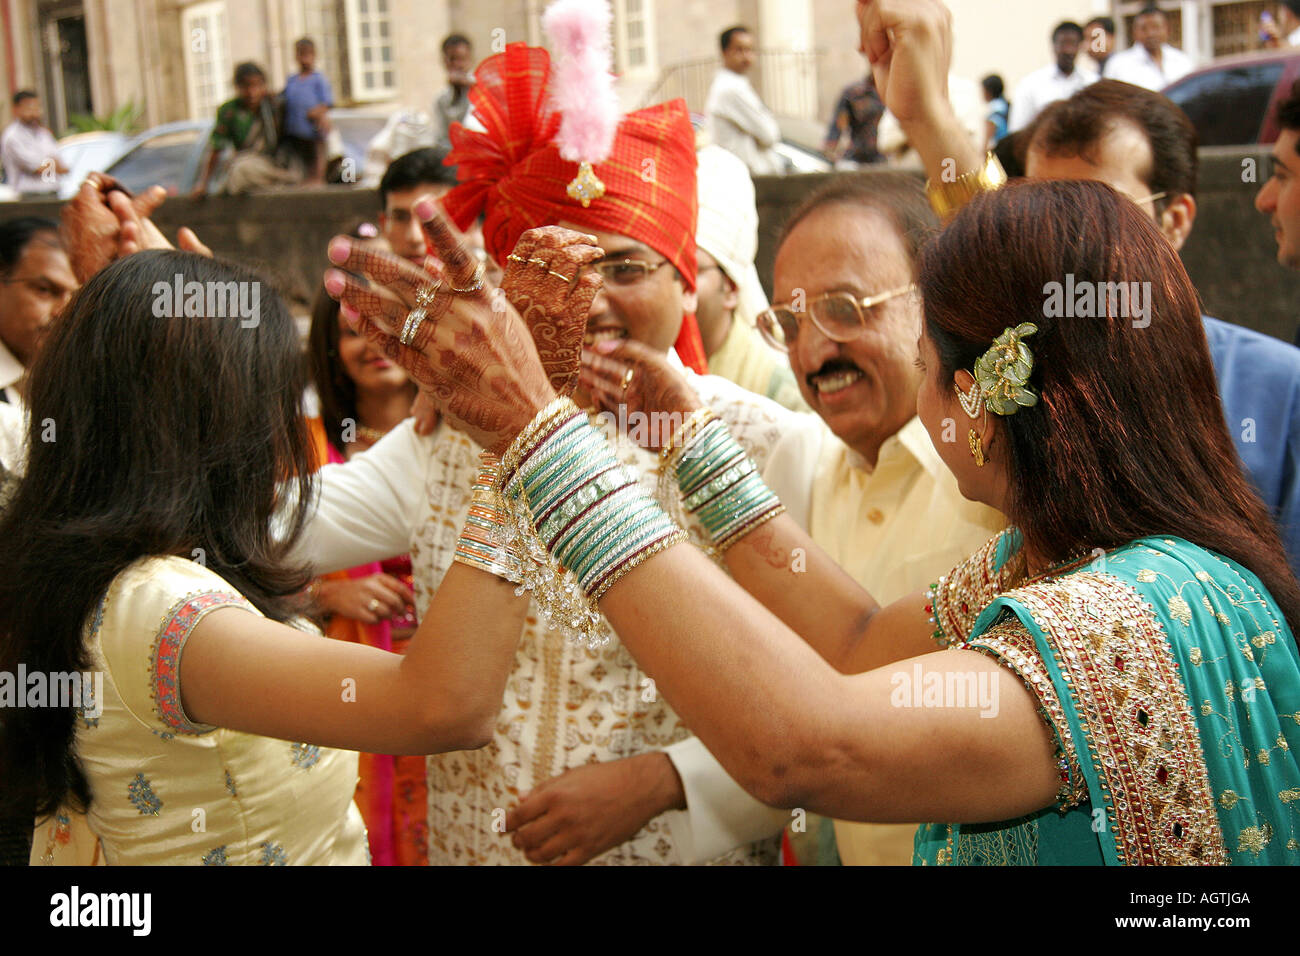 SSK79510 Indian Gujarati Bridegroom amidst dancing relatives celebrating his wedding day India Model Release 667 Stock Photo